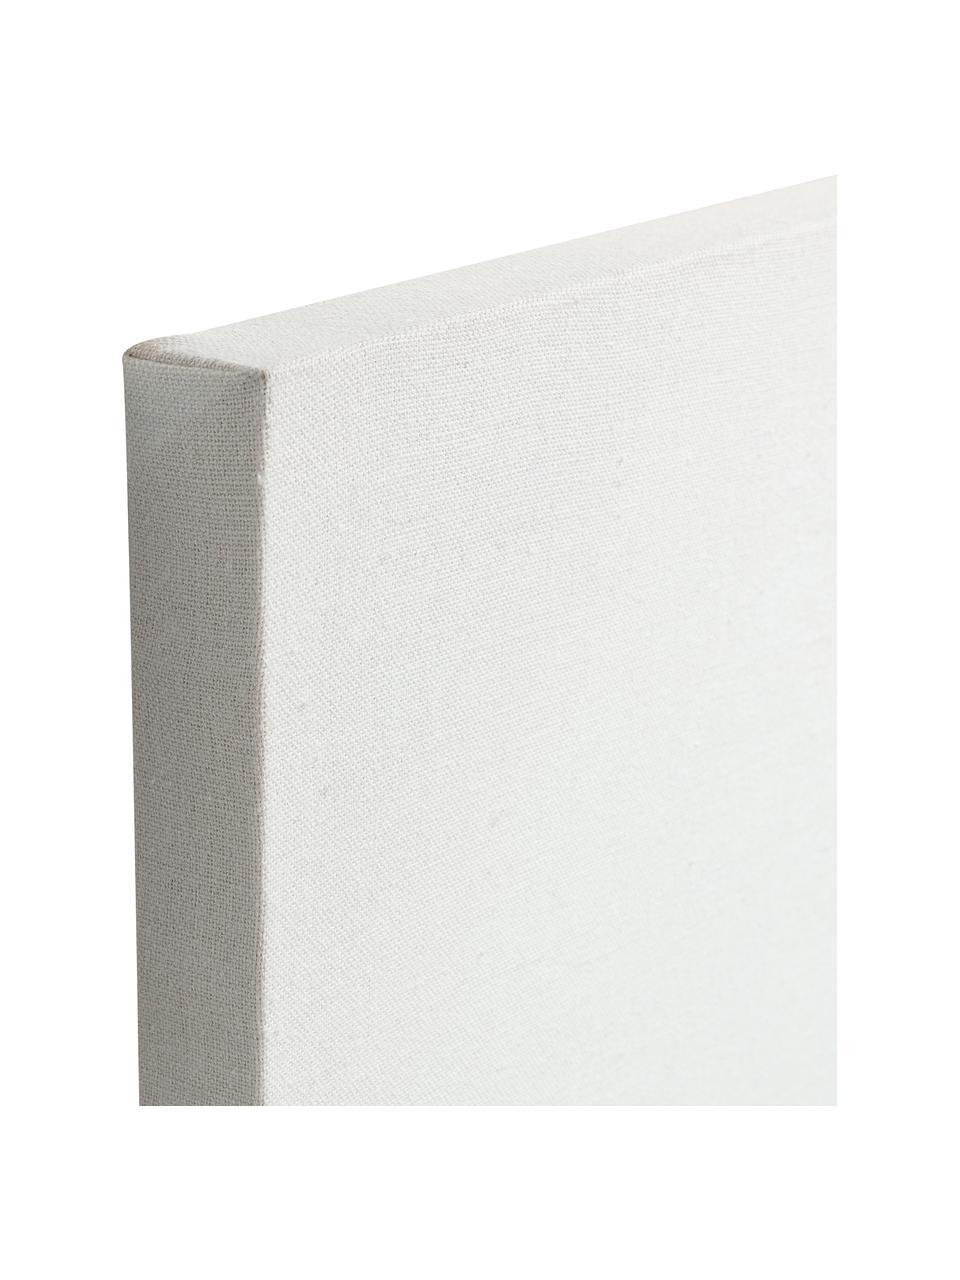 Leinwanddruck Prisma, Bild: Leinwand, Weiß, Schwarz, B 50 x H 50 cm